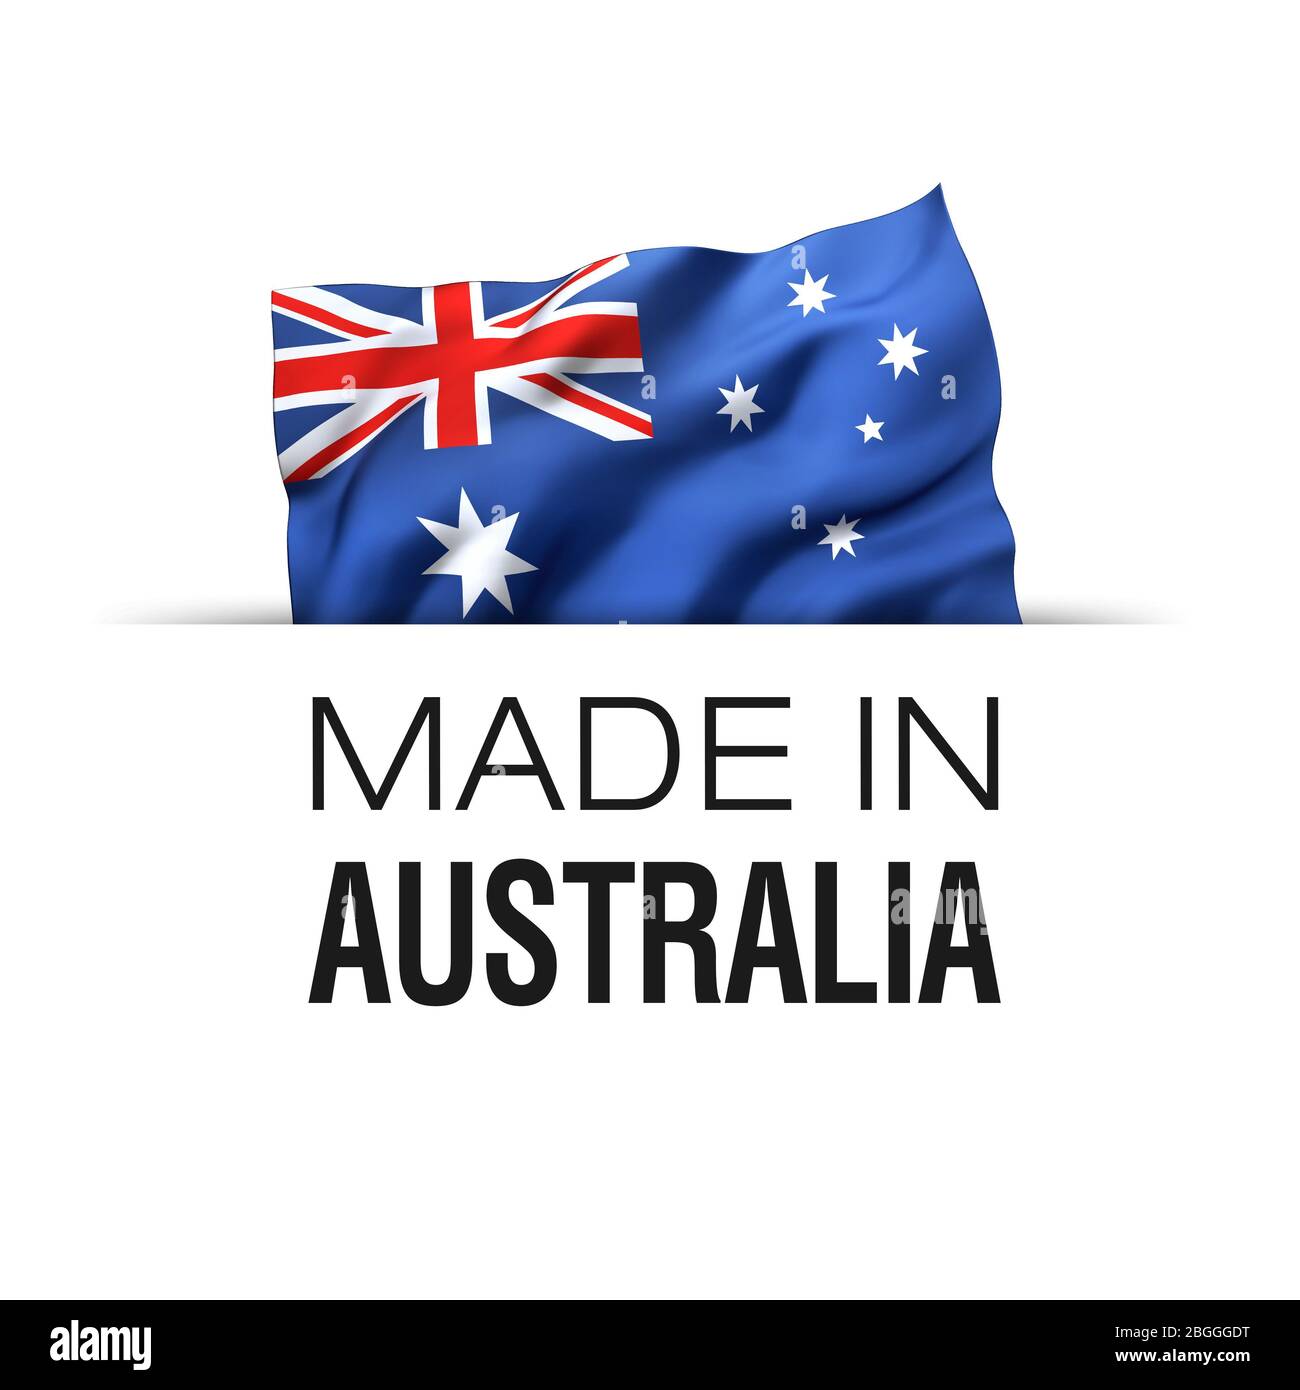 Made in Australia - Guarantee label with a waving Australian flag. Stock Photo